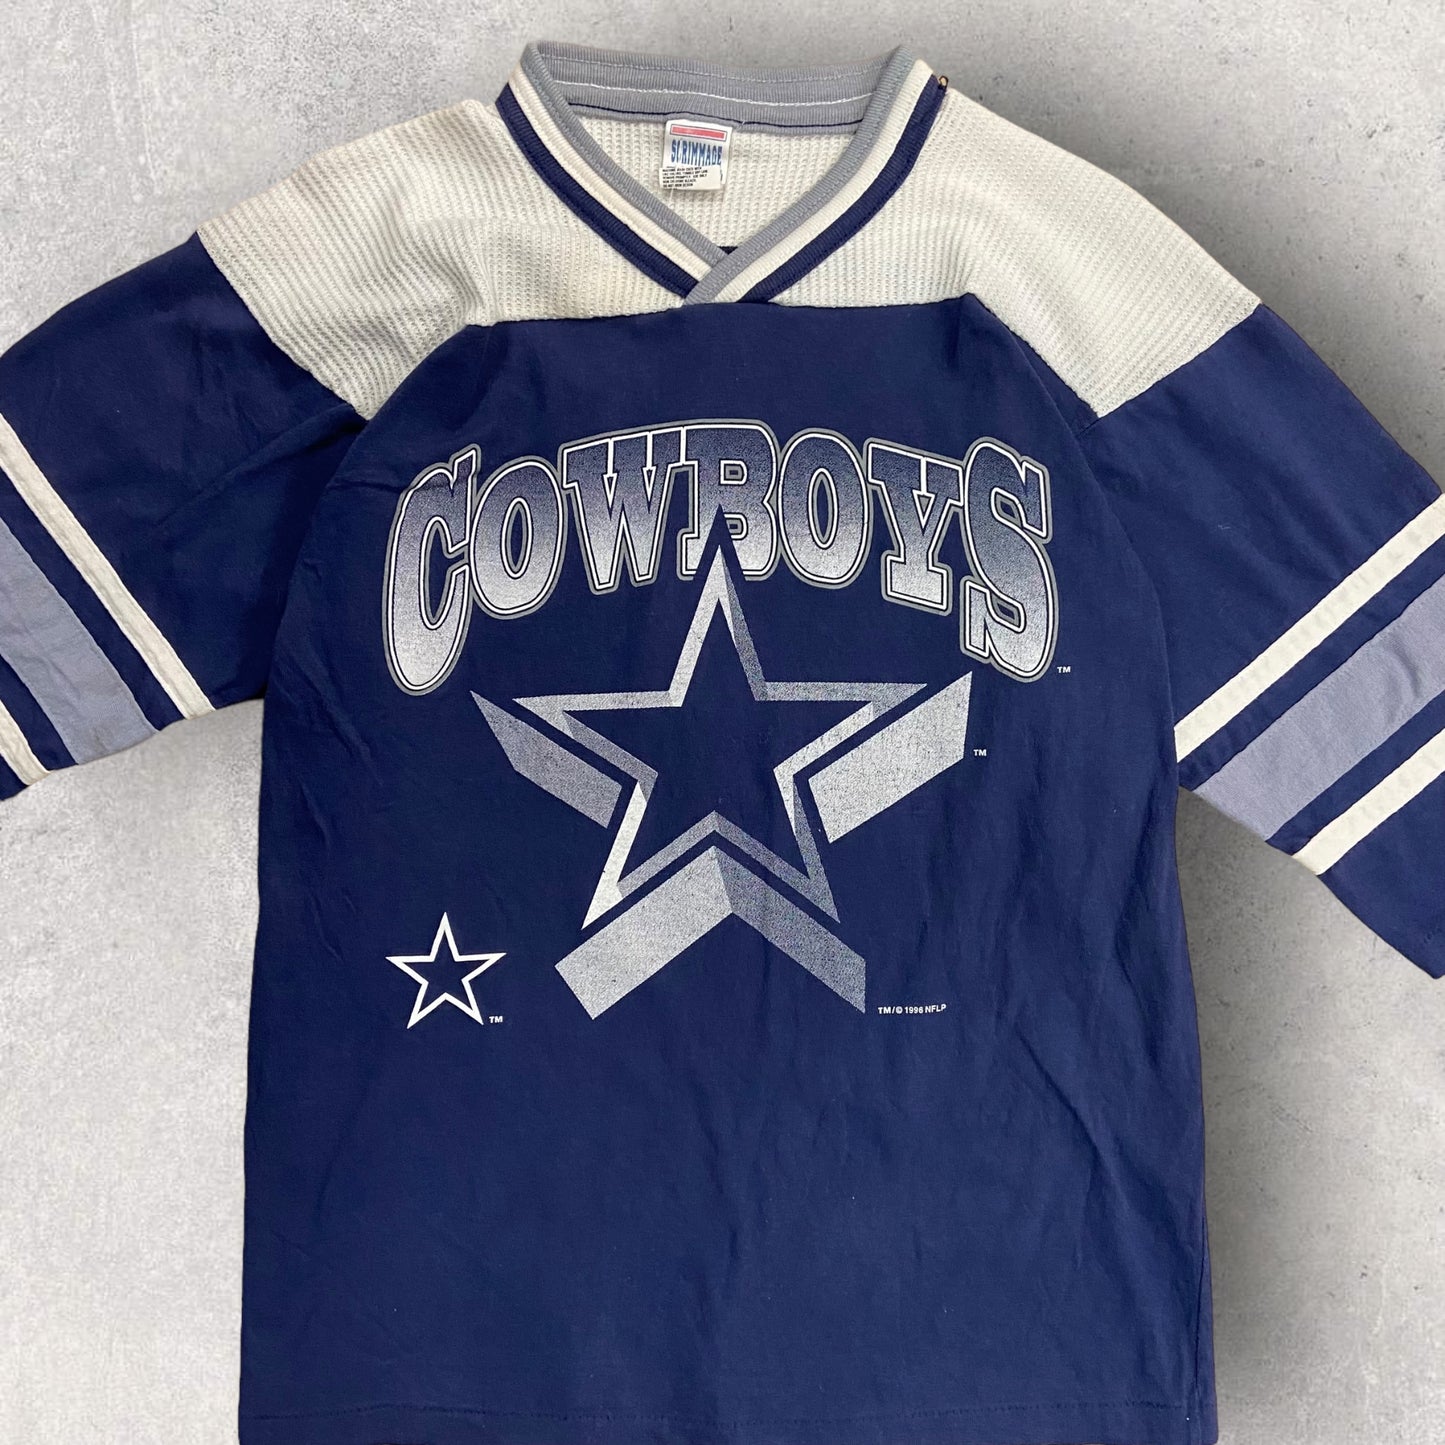 Rare vintage single stitch tee NFL Dallas Cowboys - S